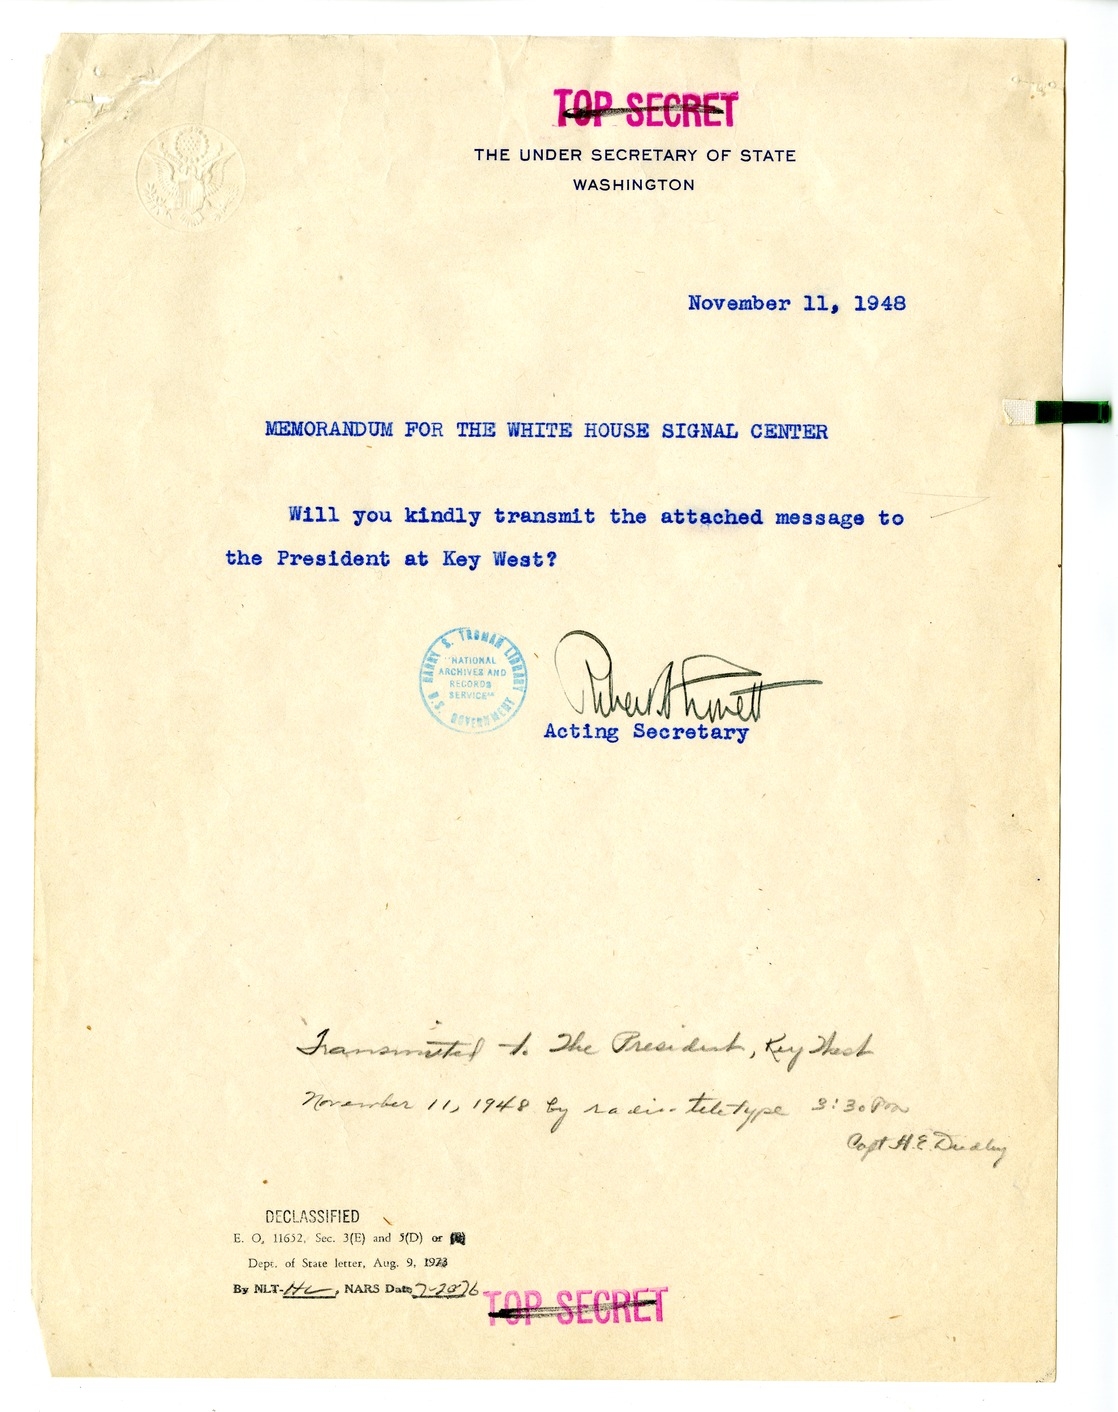 Memorandum from Robert Lovett to the White House Signal Center, with Attachment